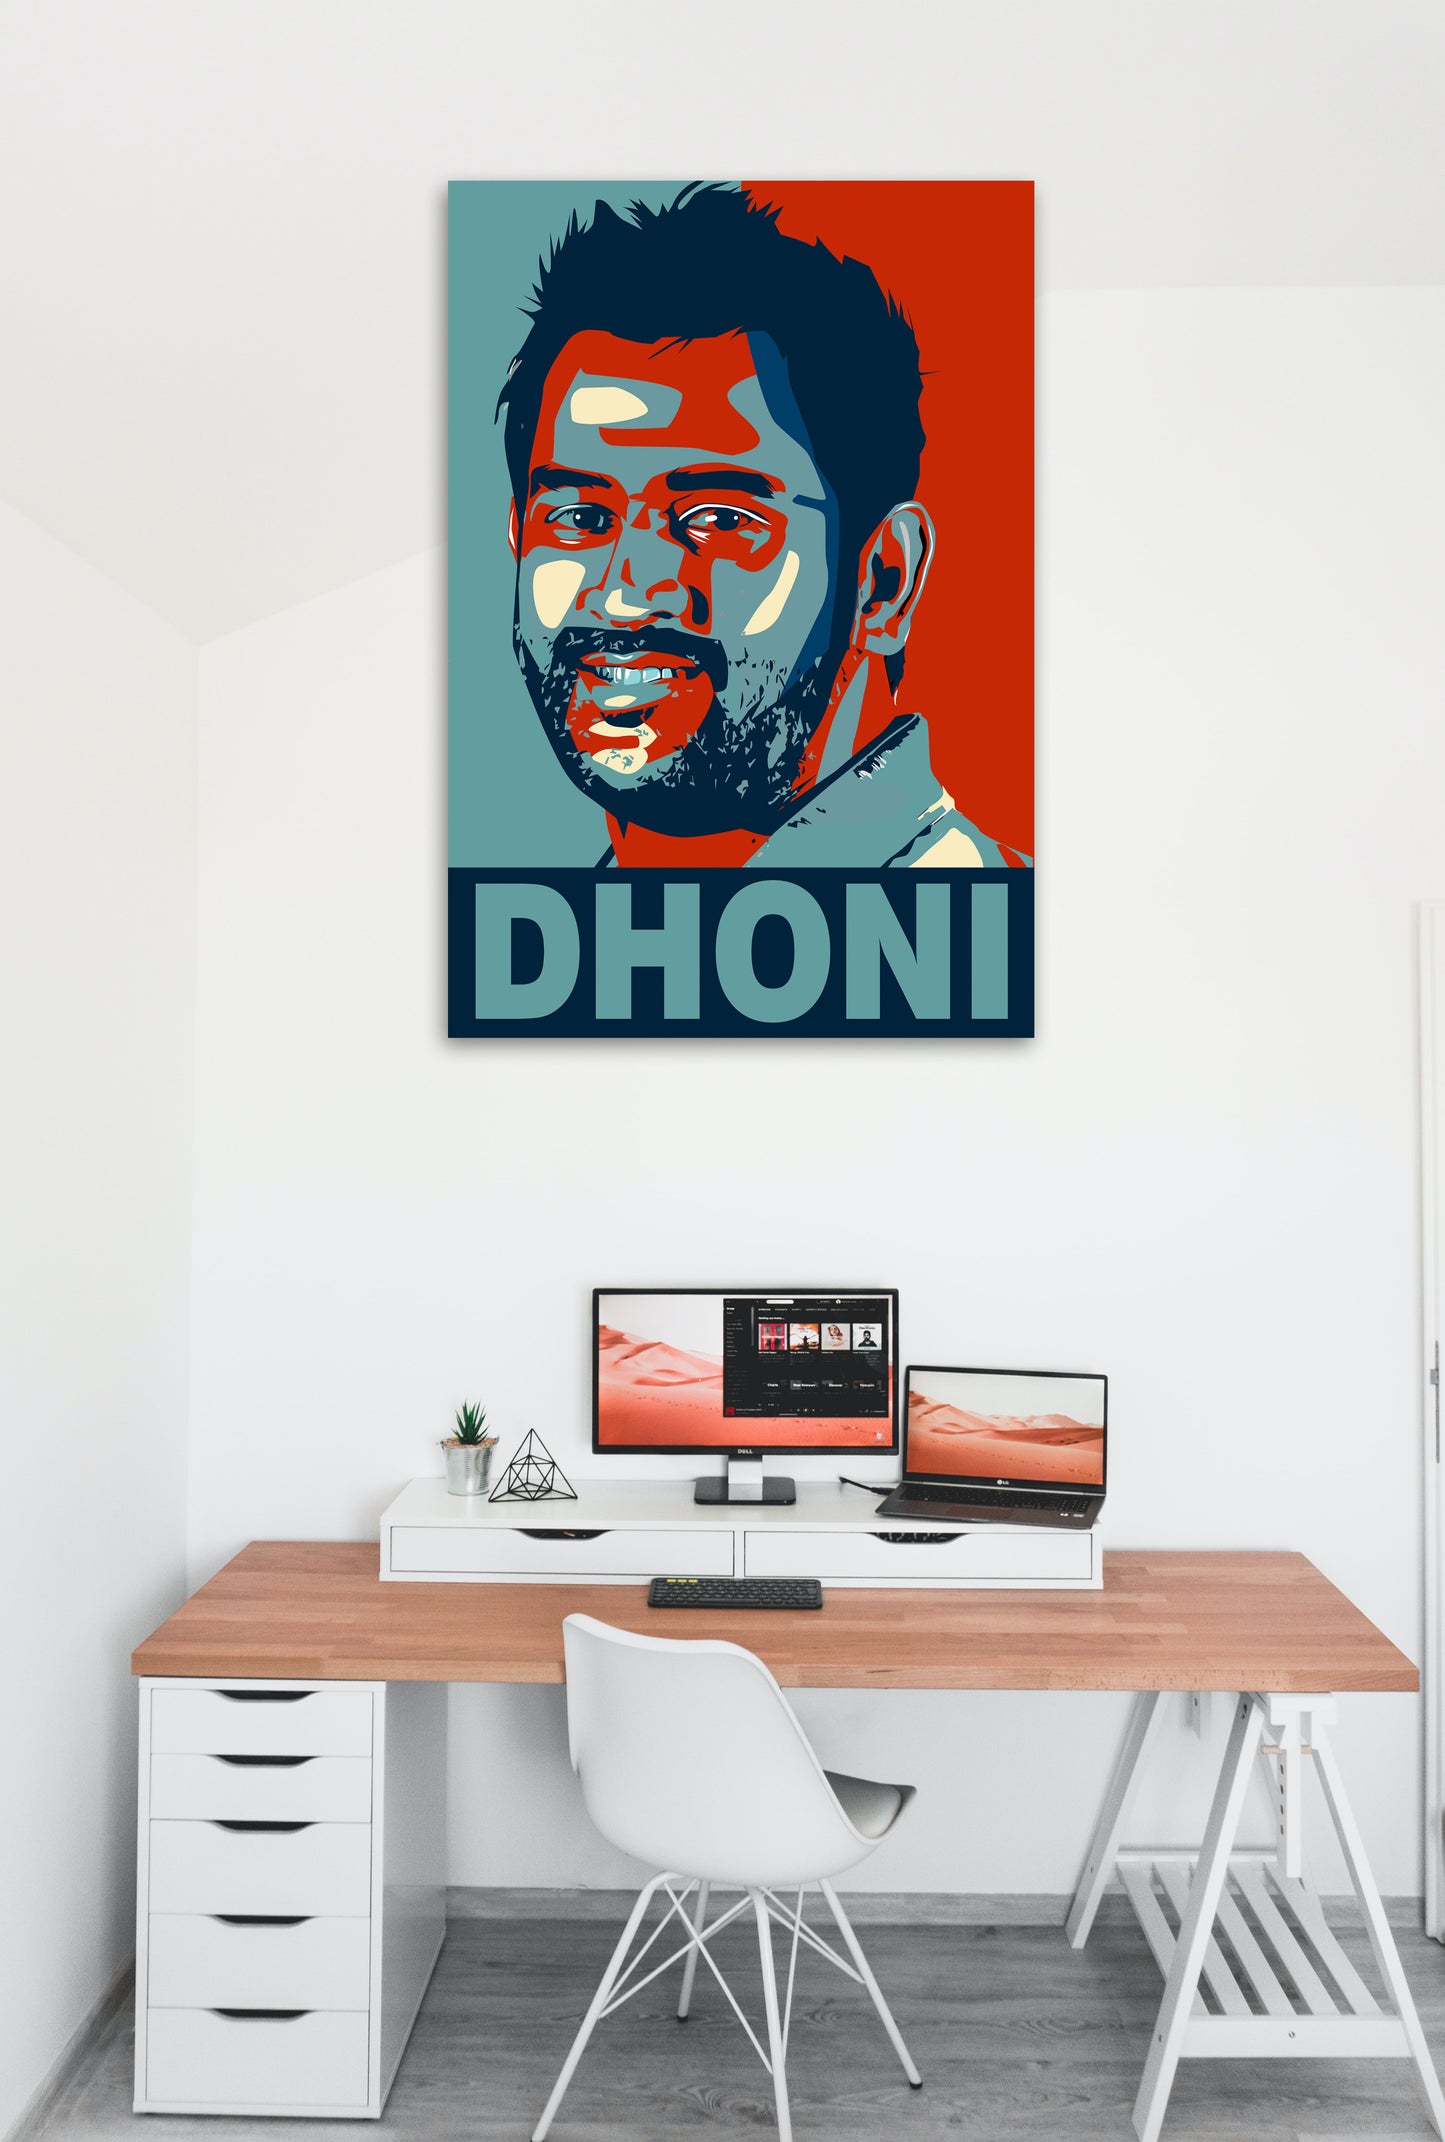 Dhoni Art work